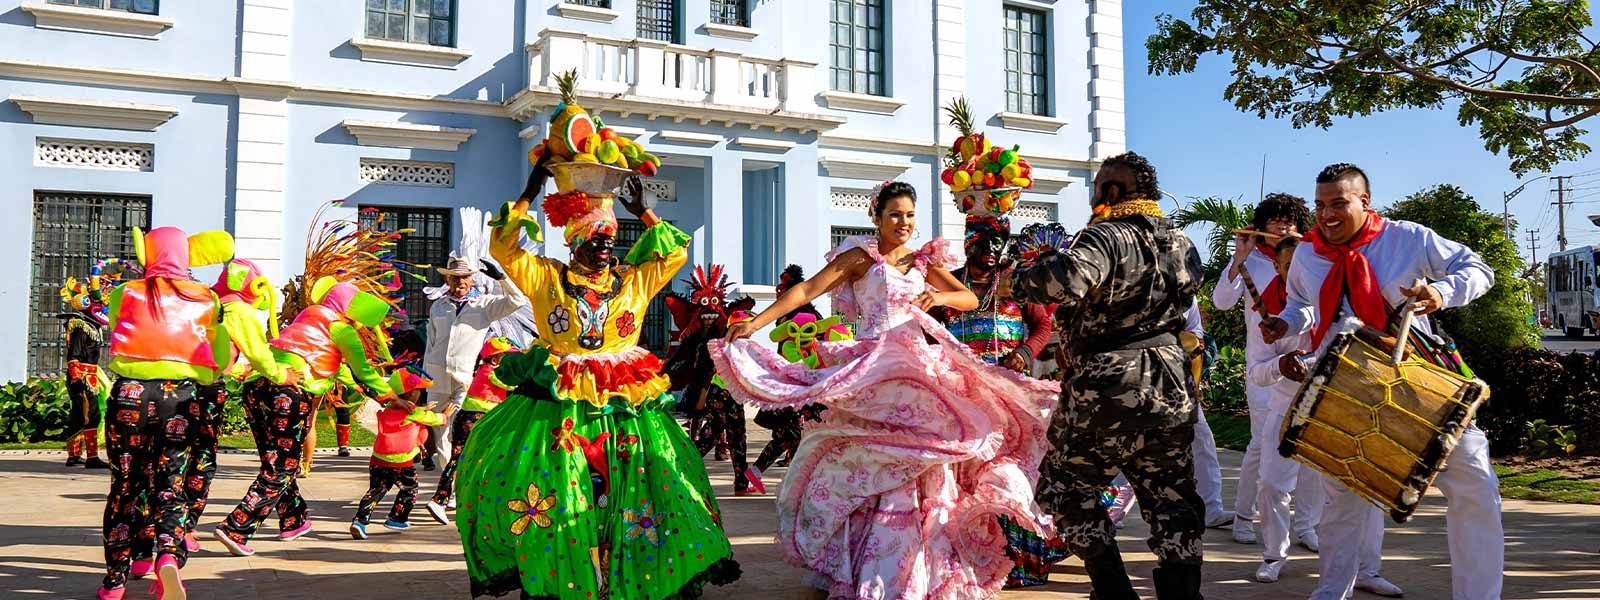 Dansende mensen in Colombia